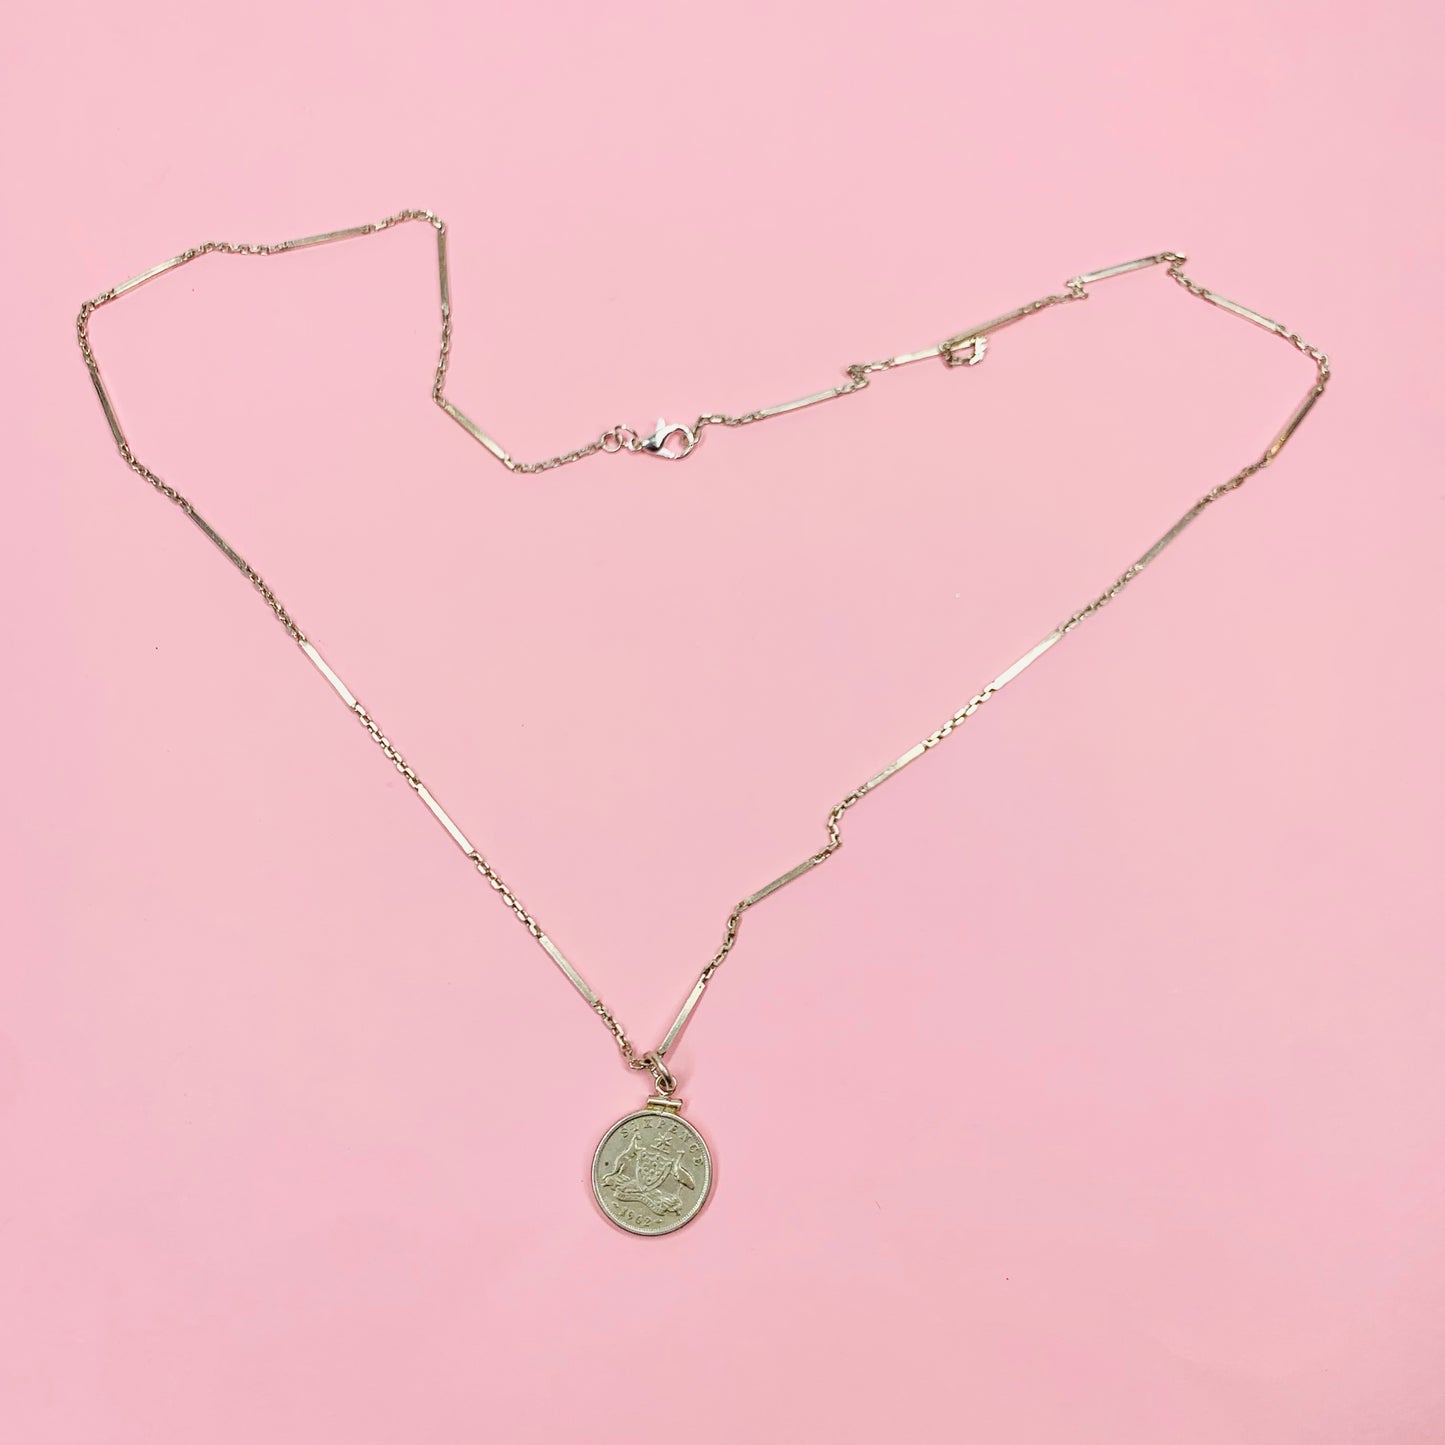 Coin pendant necklace